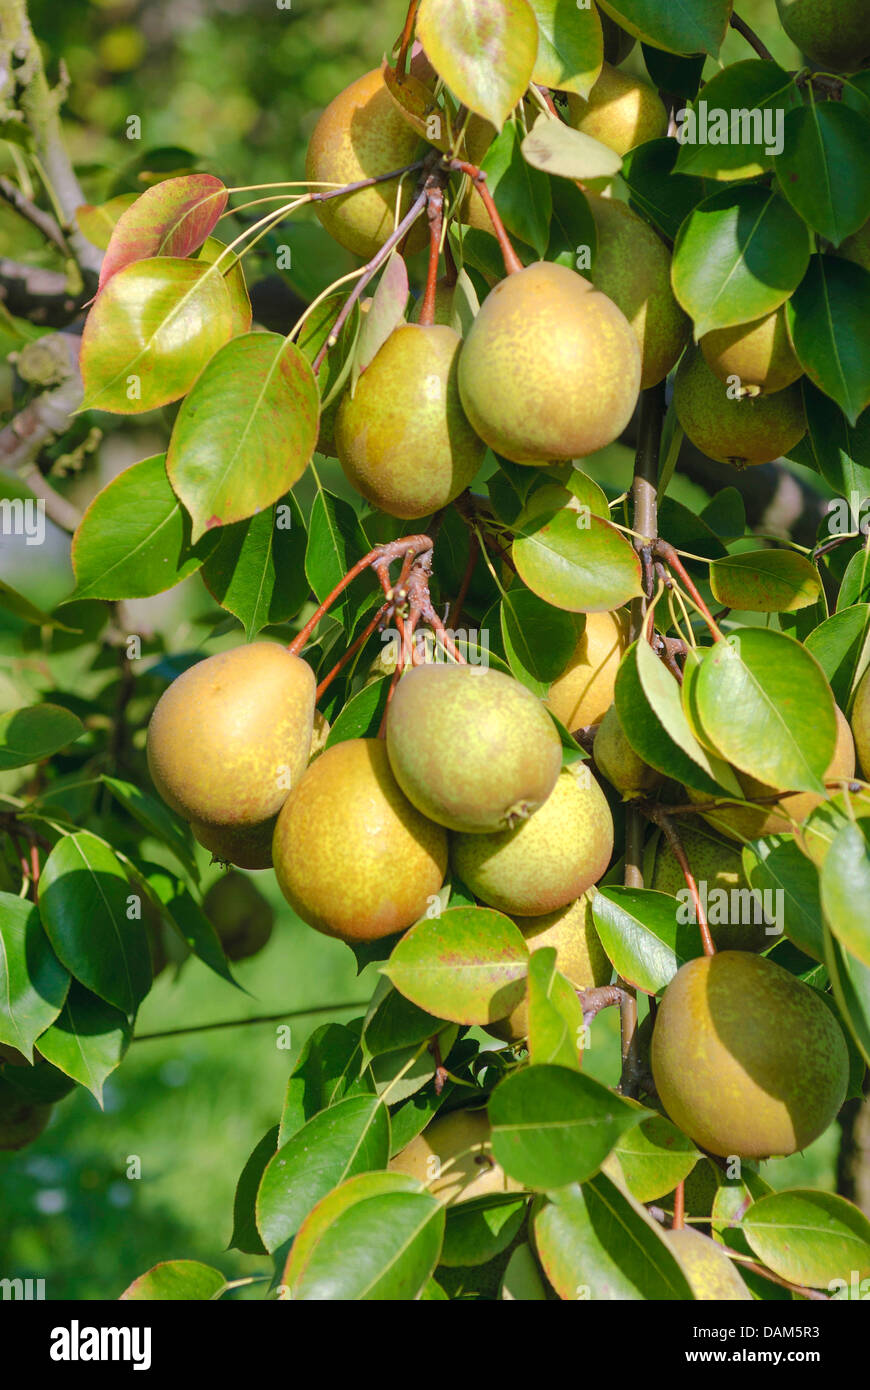 Common pear (Pyrus communis 'Tie Ton', Pyrus communis Tie Ton), cultivar Tie Ton Stock Photo